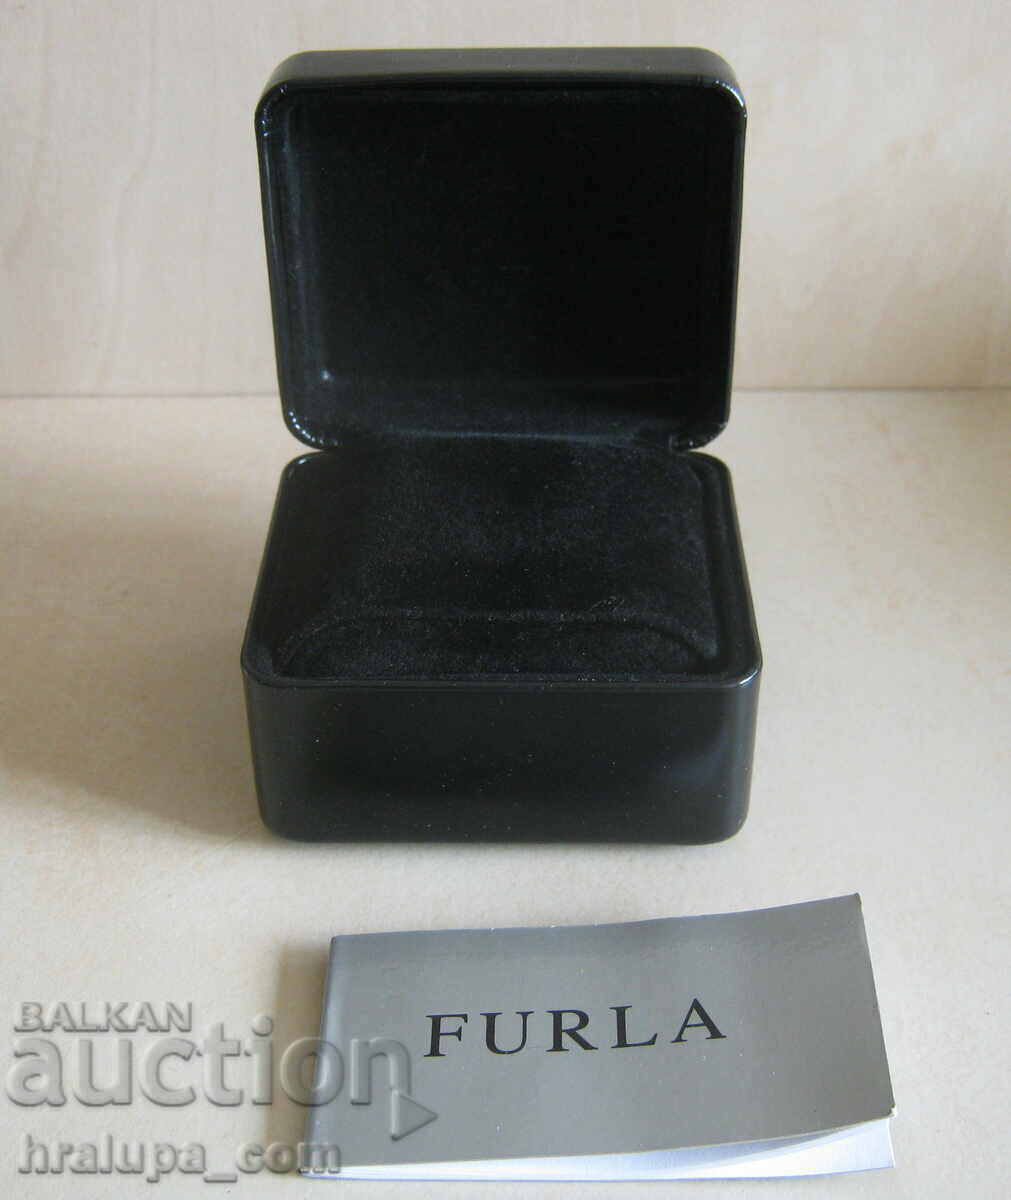 Furla watch case